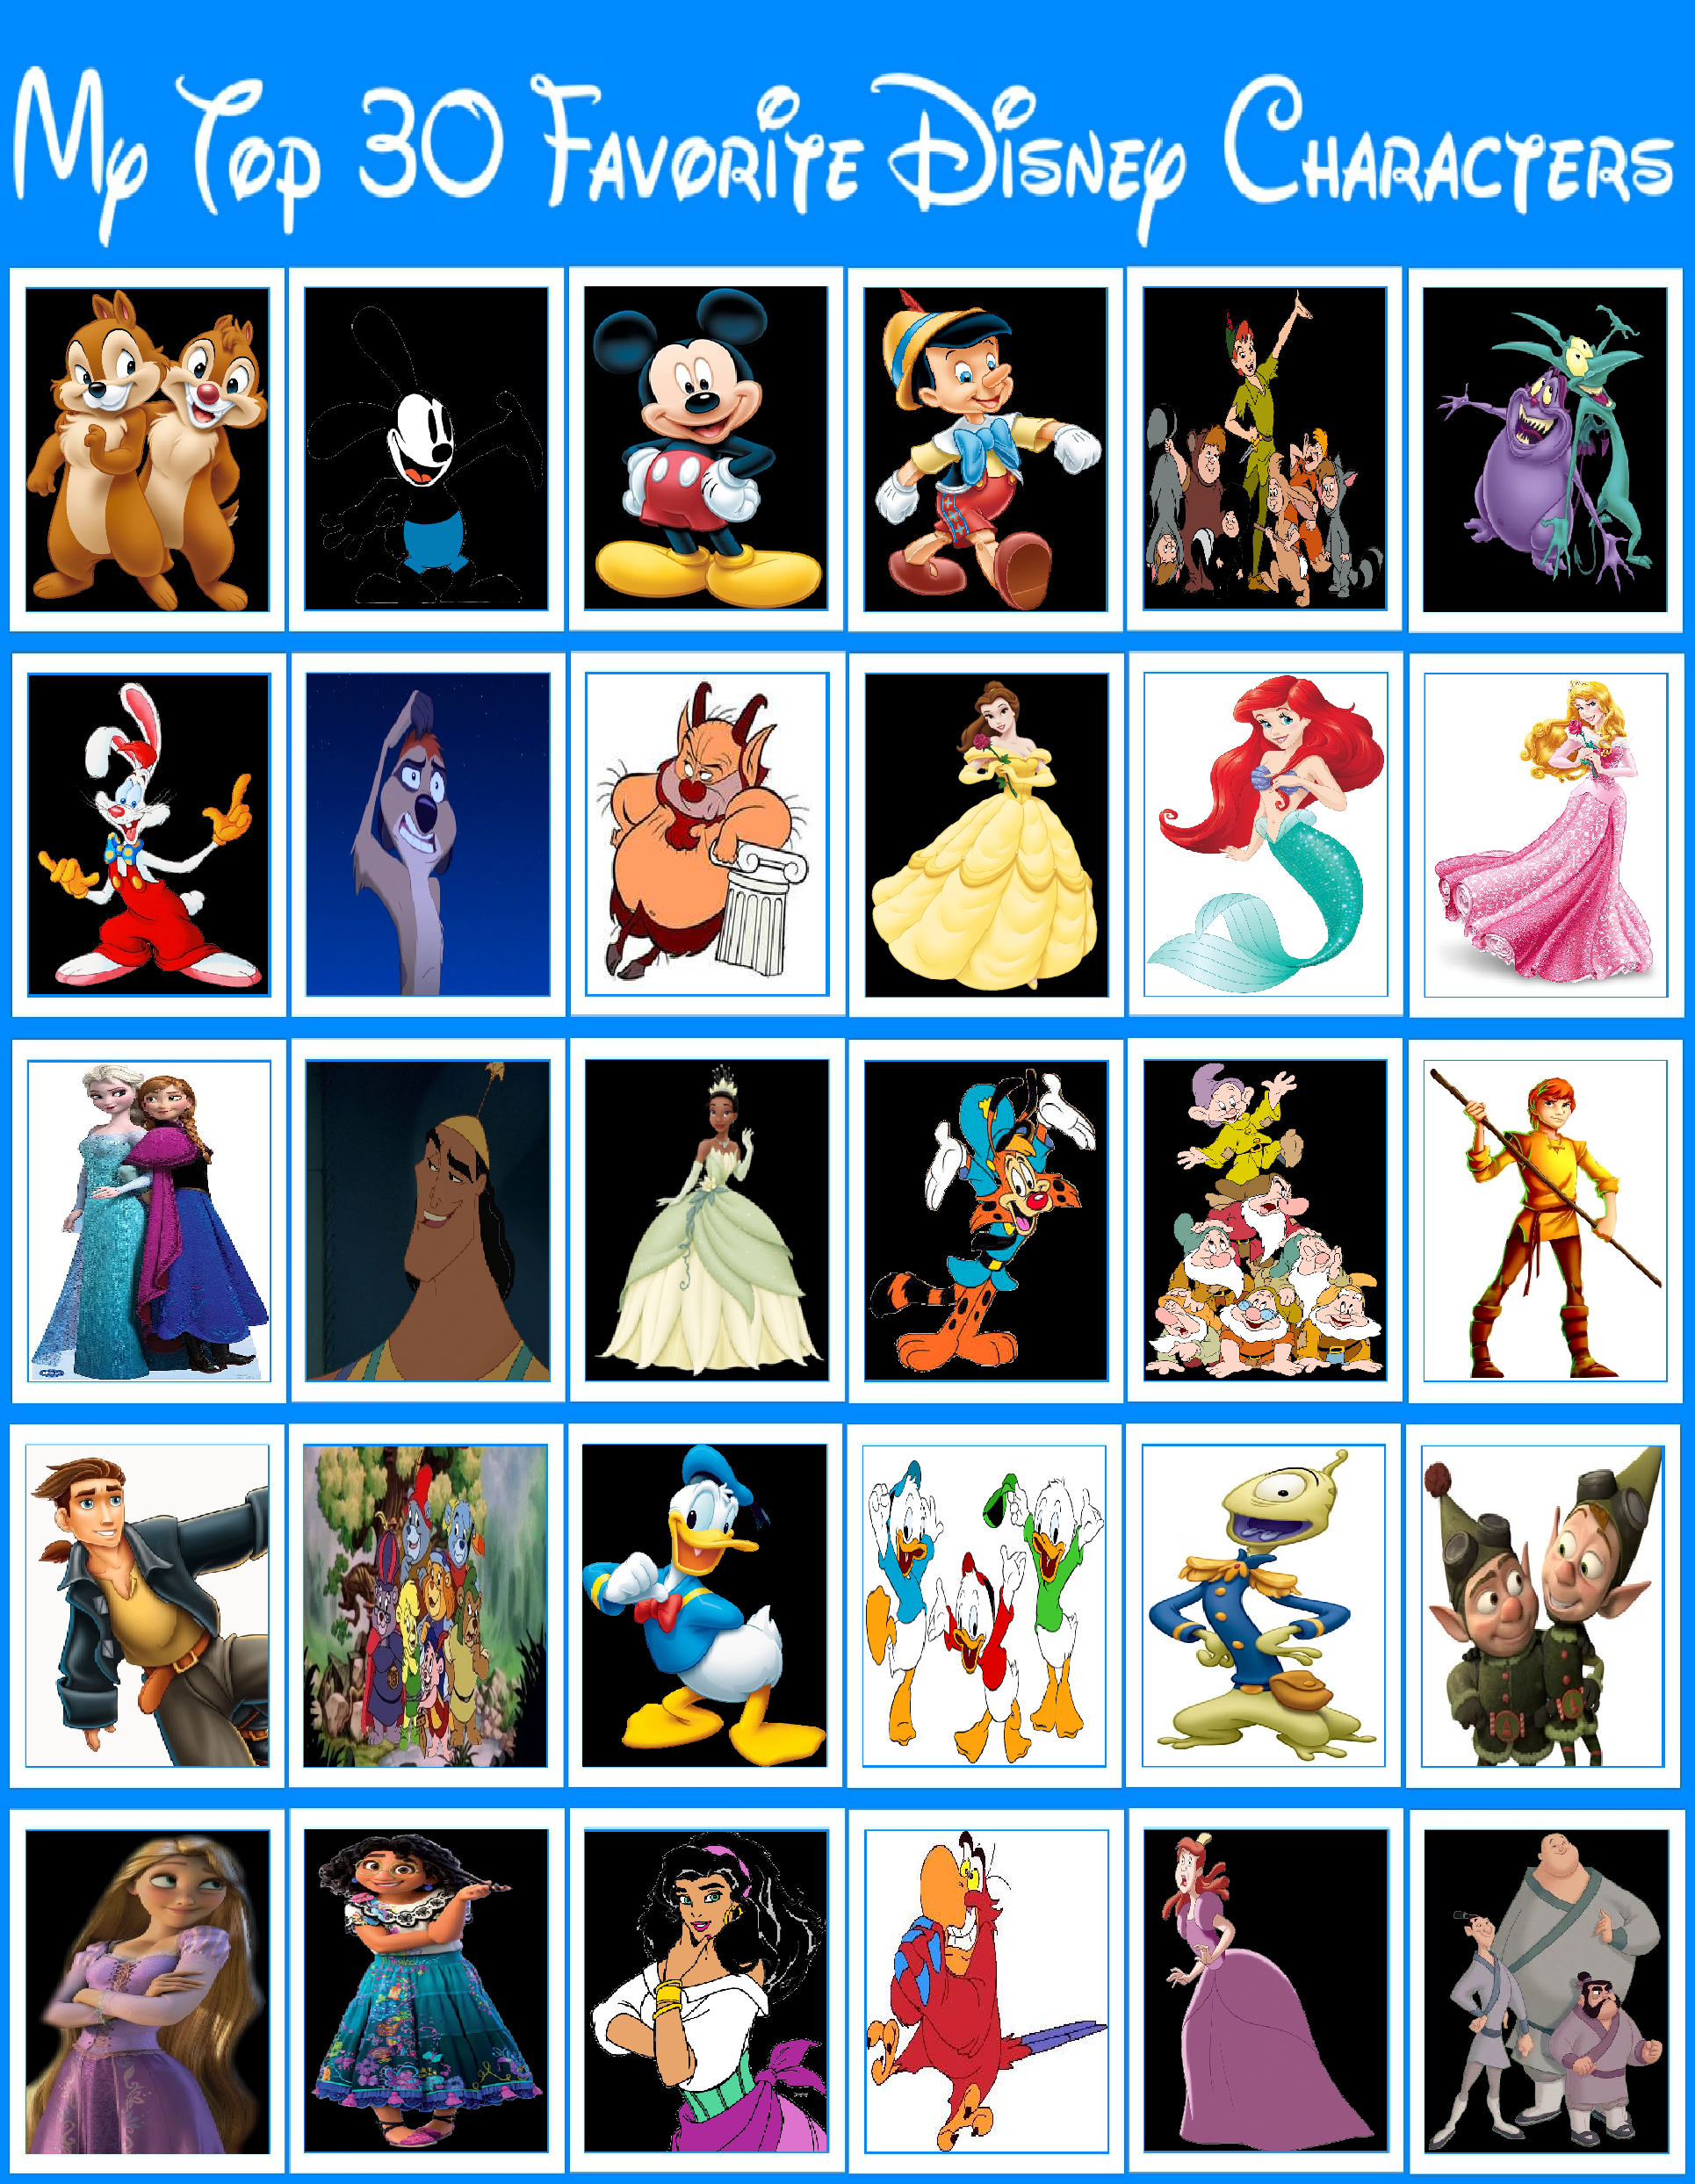 My Top 30 Favorite Disney Characters by MorganTheFandomGirl on DeviantArt